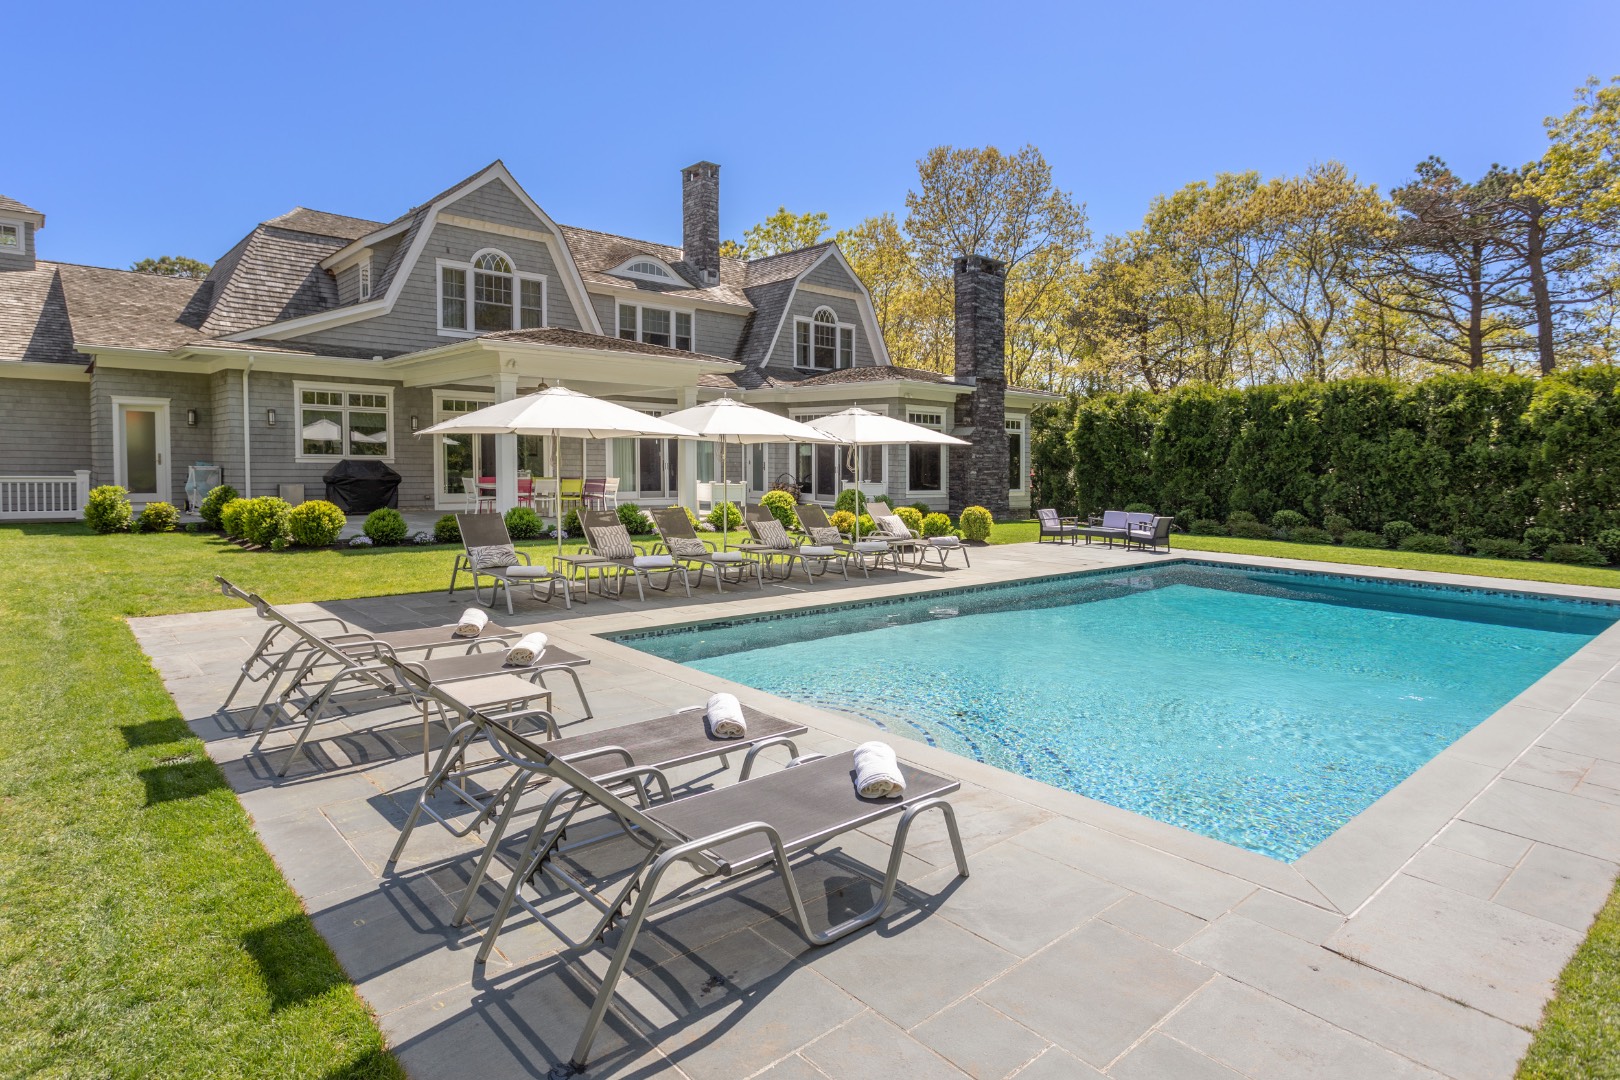 Rental Property at 15 Peach Farm Lane, East Hampton, Hamptons, NY - Bedrooms: 6 
Bathrooms: 6.5  - $150,000 MO.